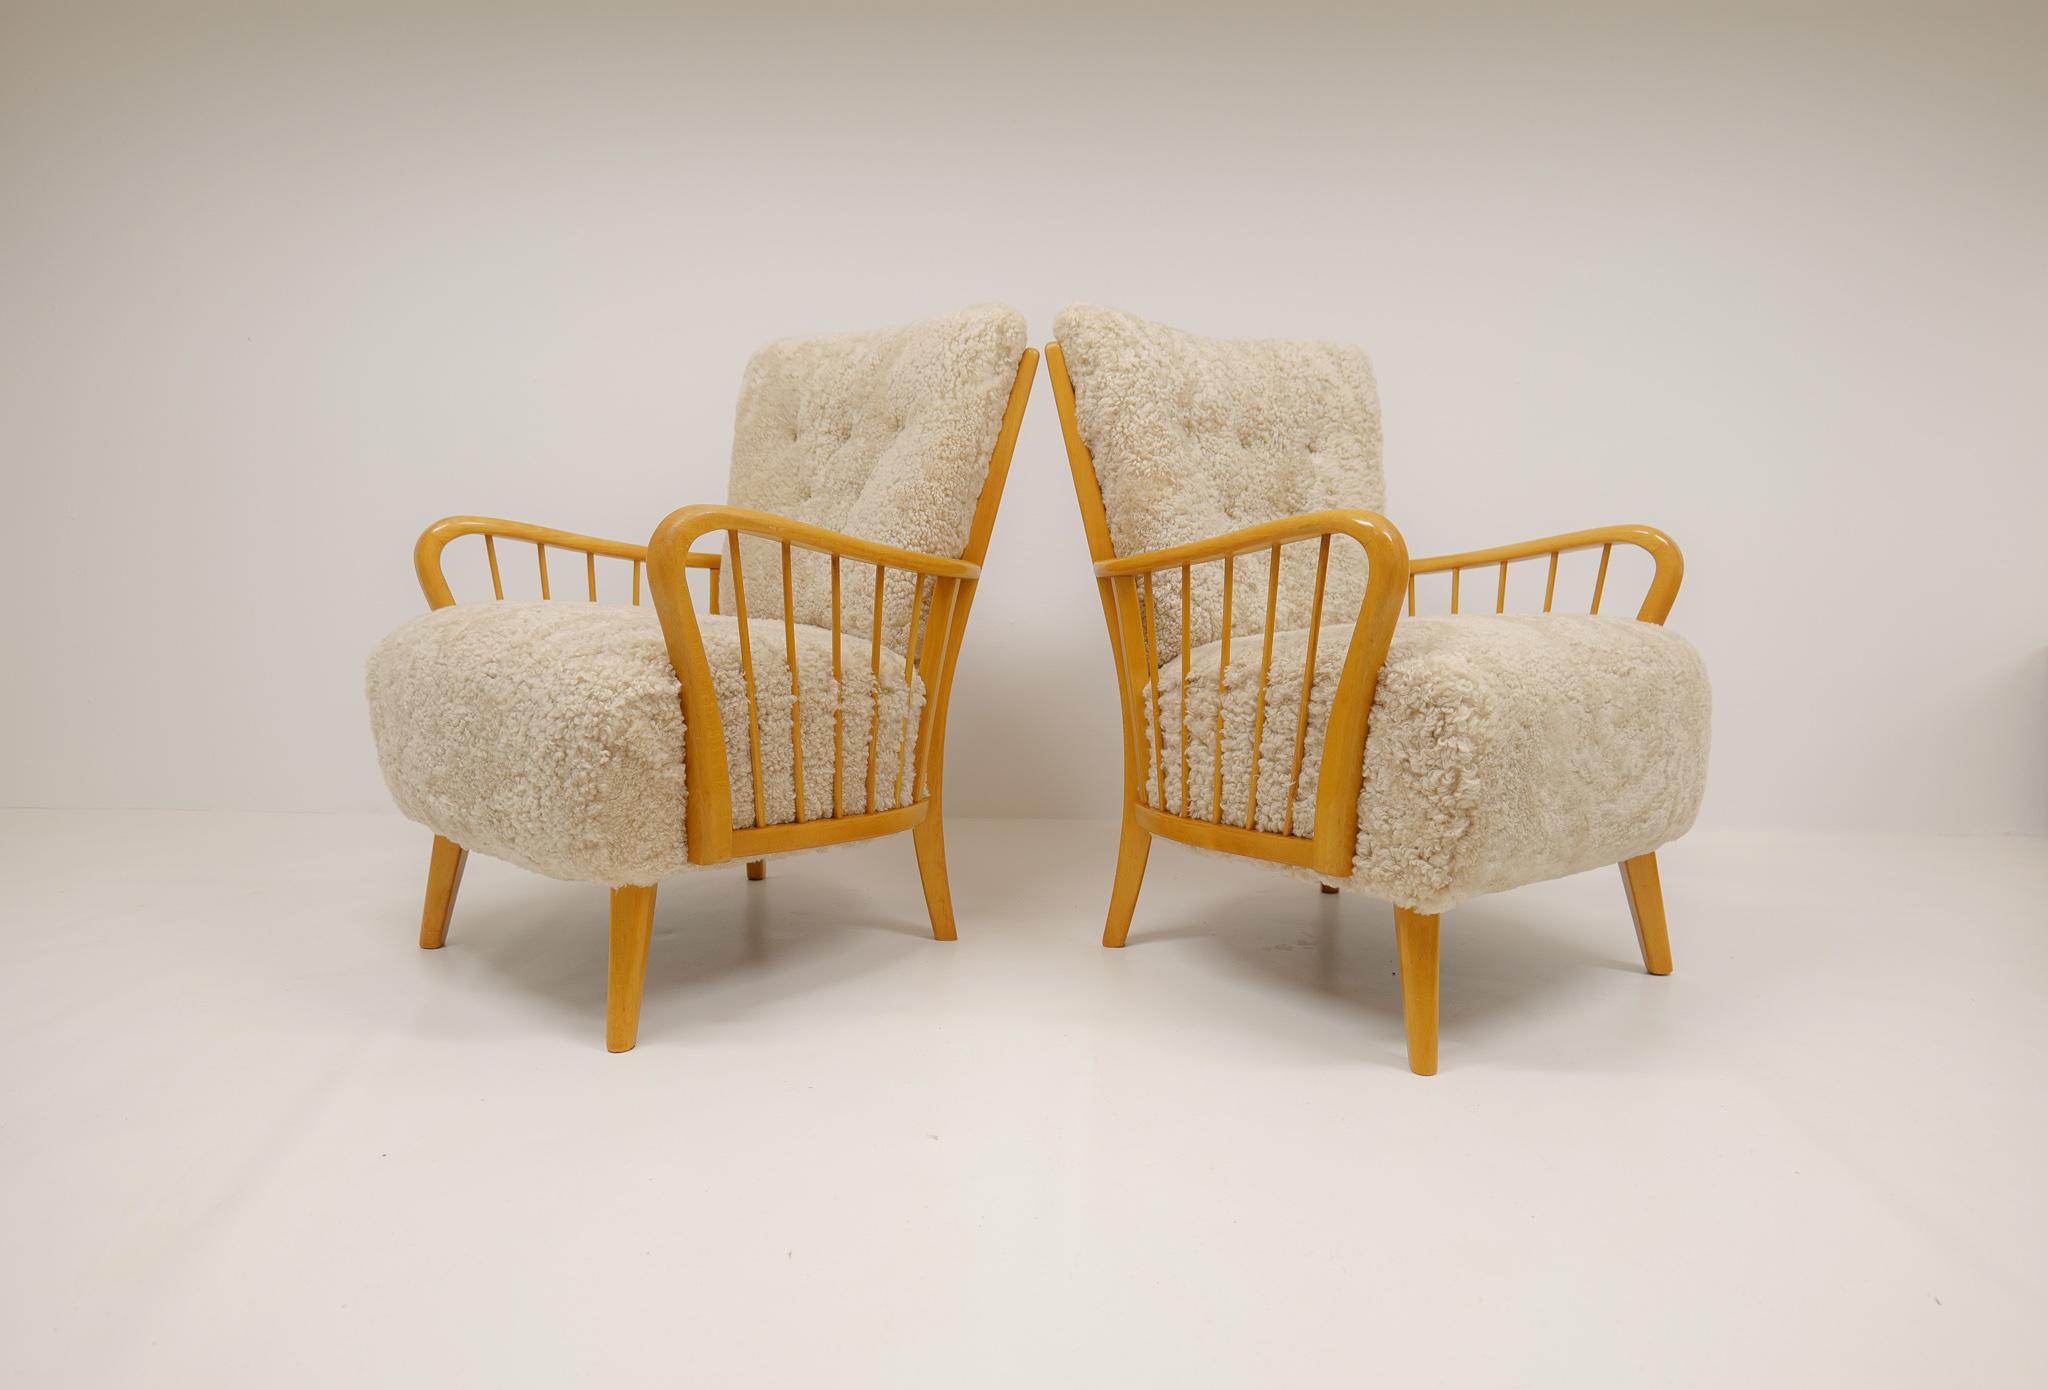 Art Deco Swedish Grace Lounge Chairs in Shearling / Sheepskin 1940s Sweden For Sale 11